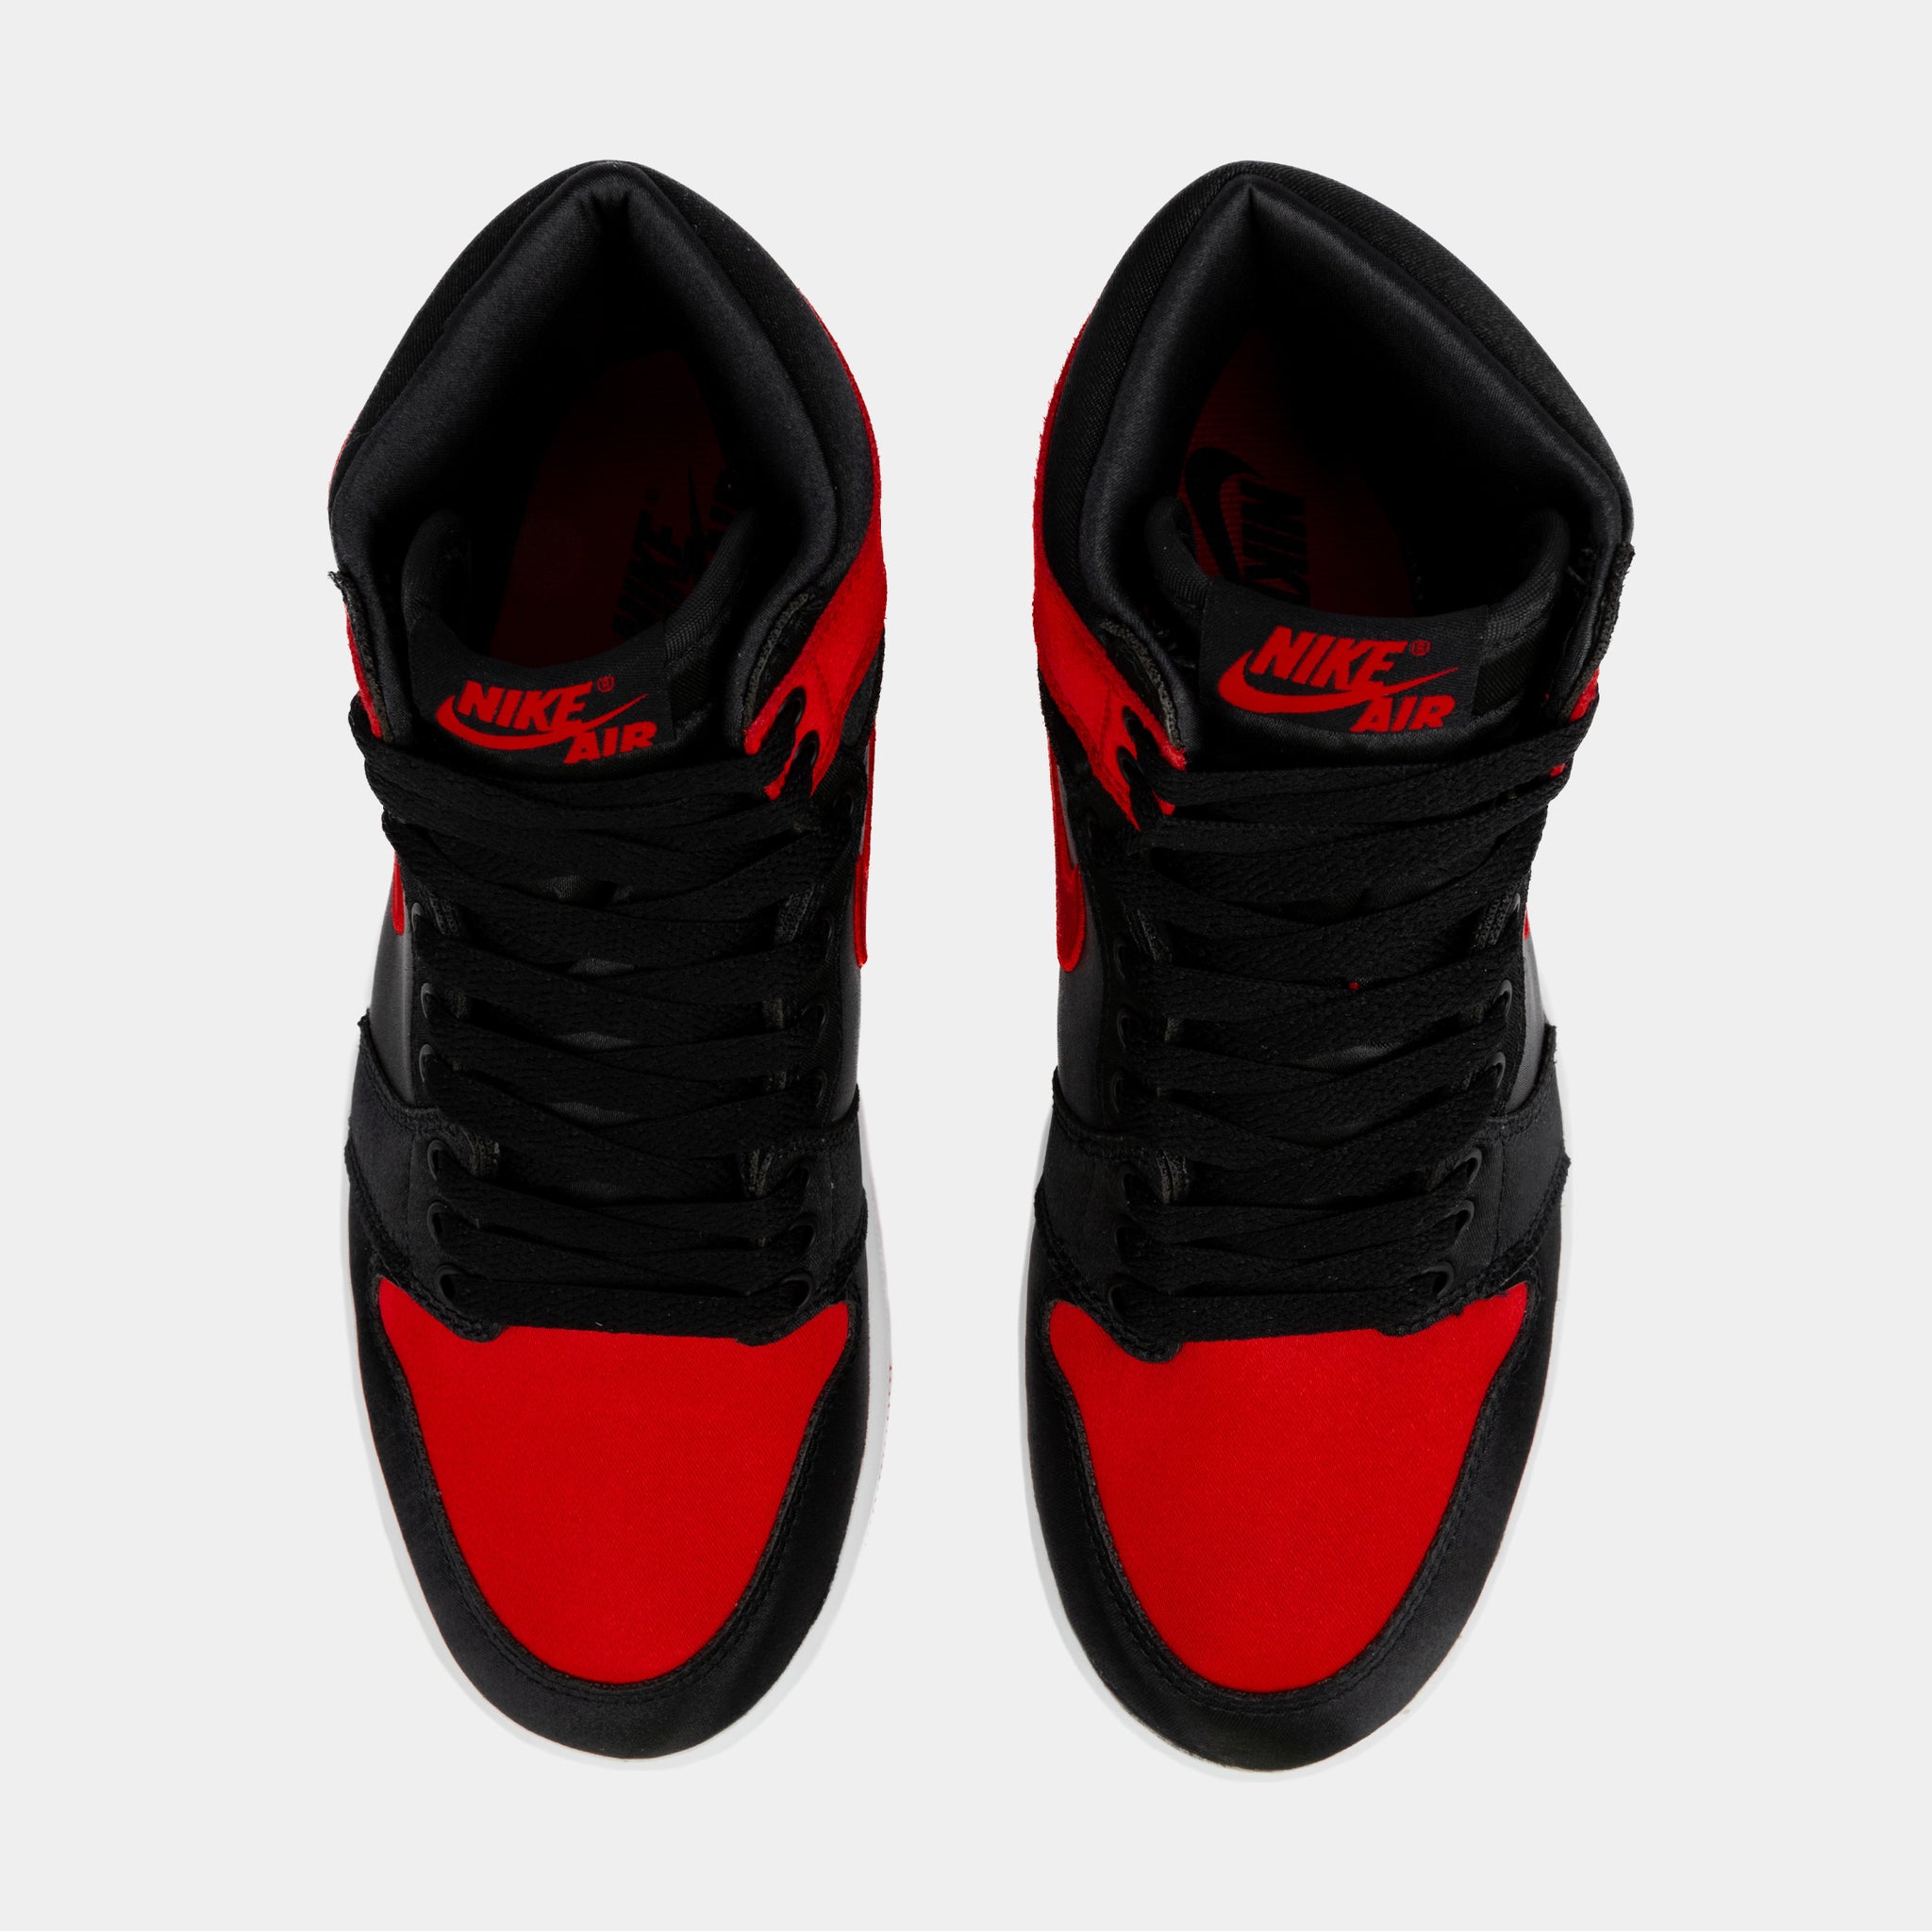 Air Jordan 1 Retro High OG Black Satin Shoes